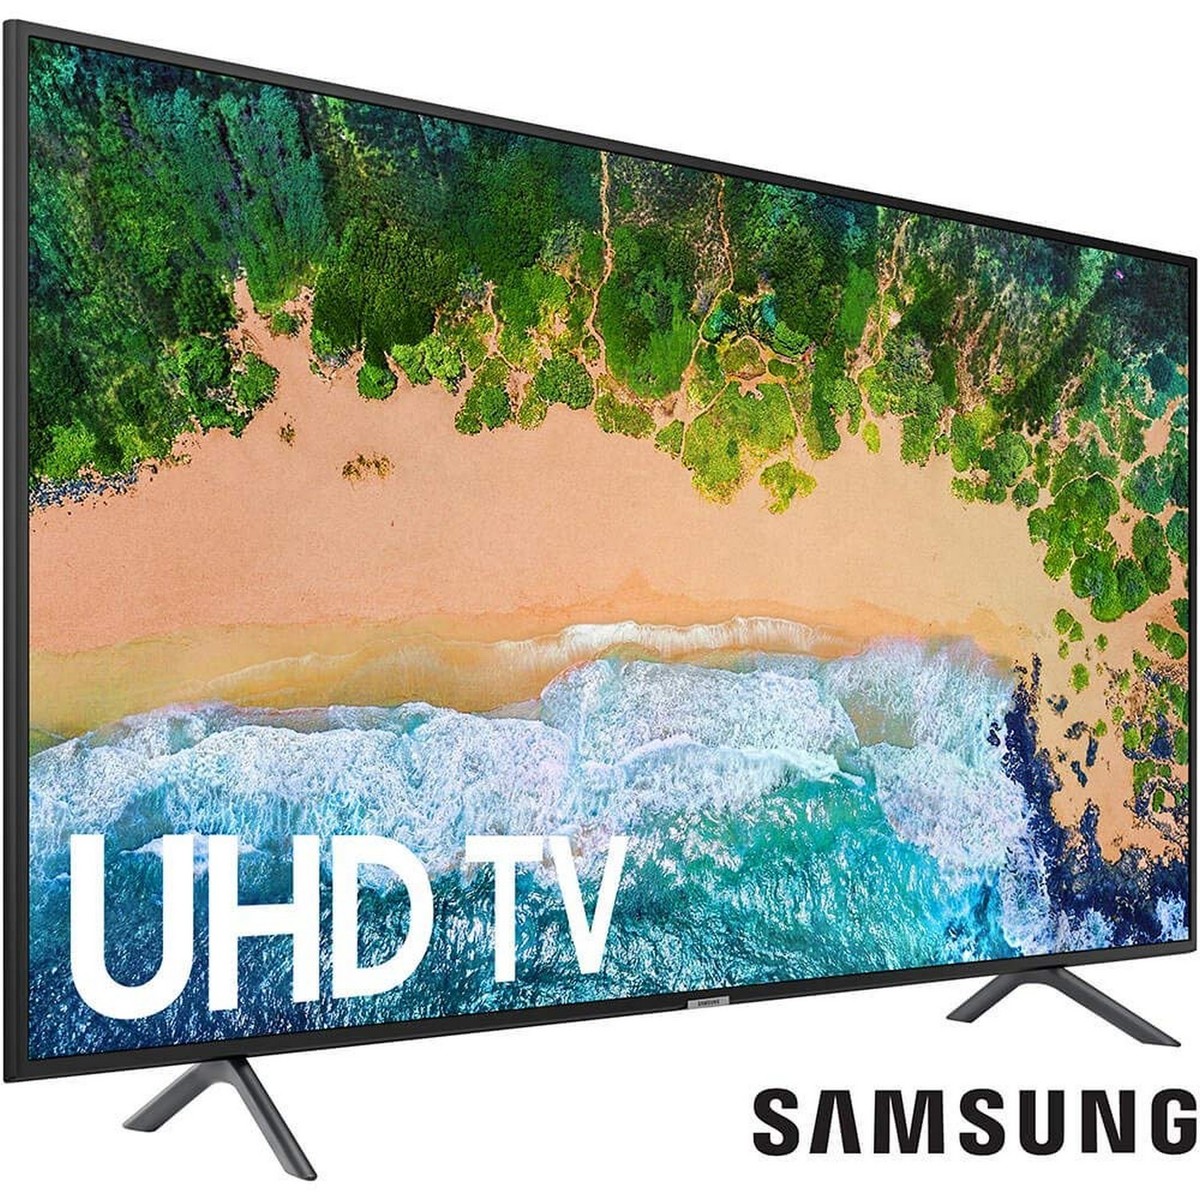 Samsung Premium Ultra HD Smart LED TV UA65NU7100 65inch